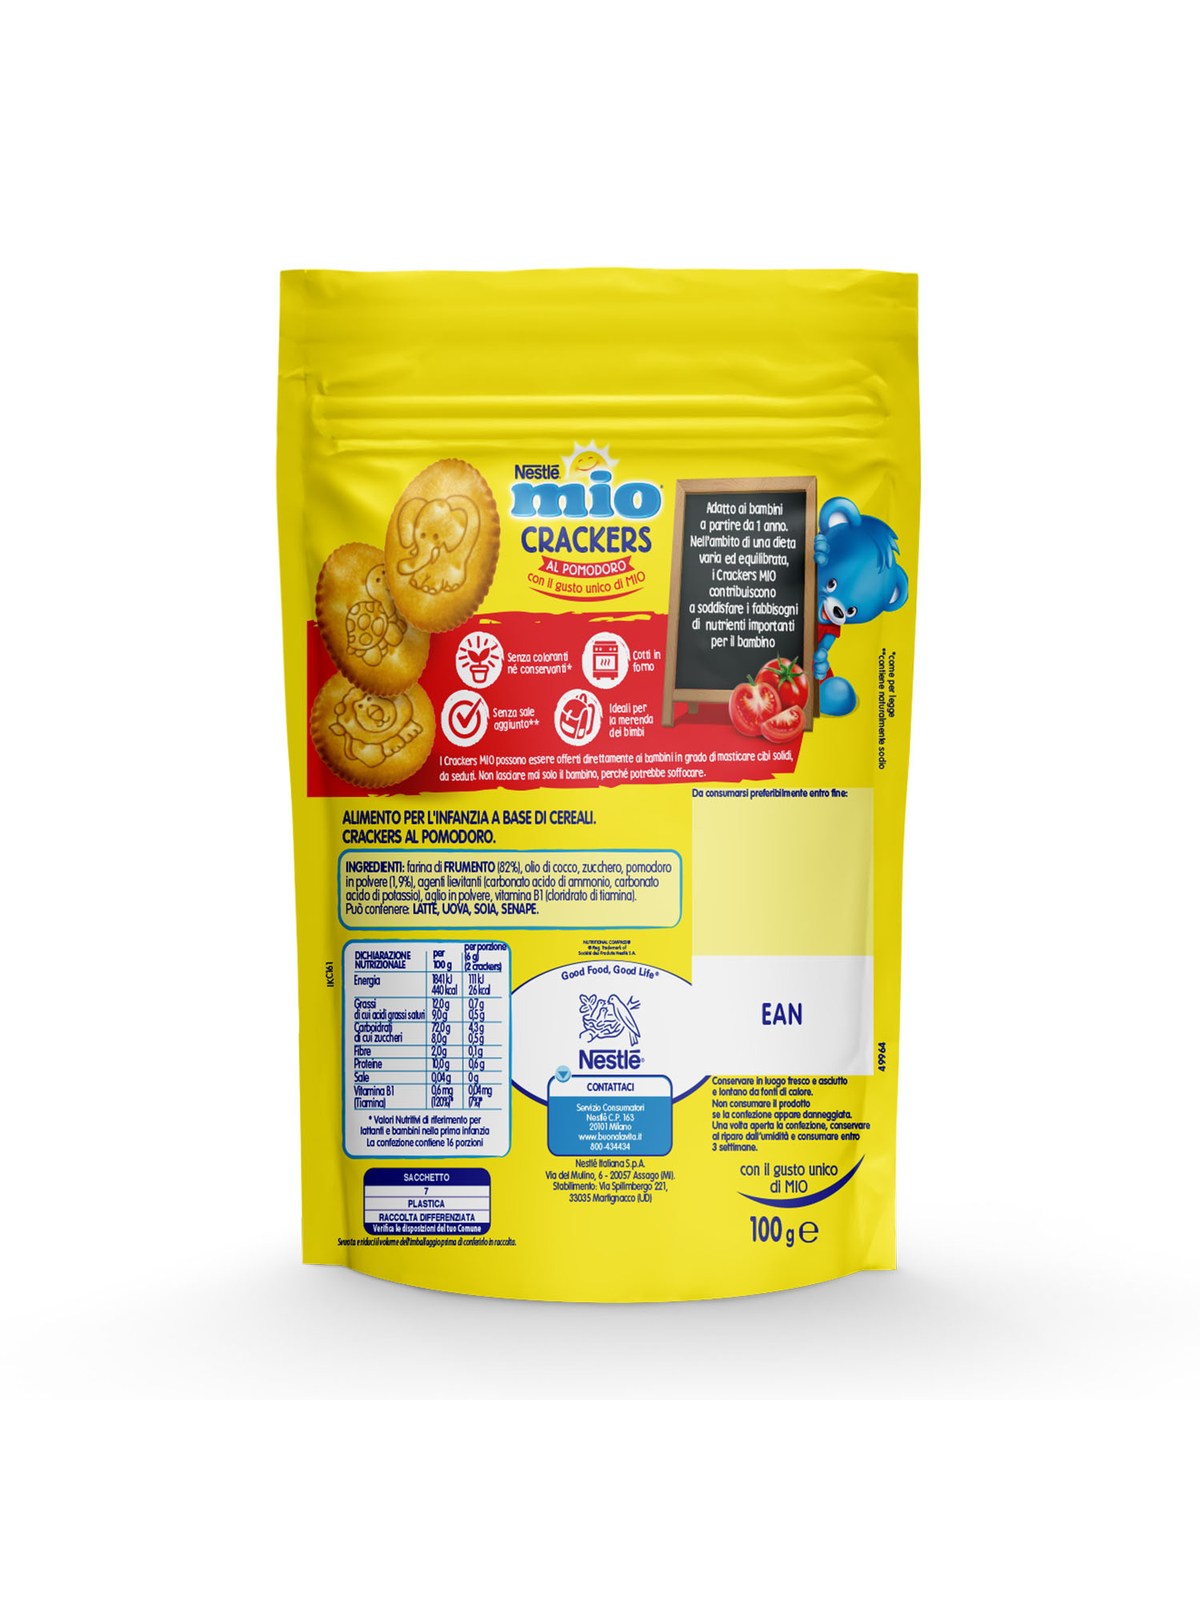 Nestle' - mio crackers pomodoro 100gr - Nestlé Mio